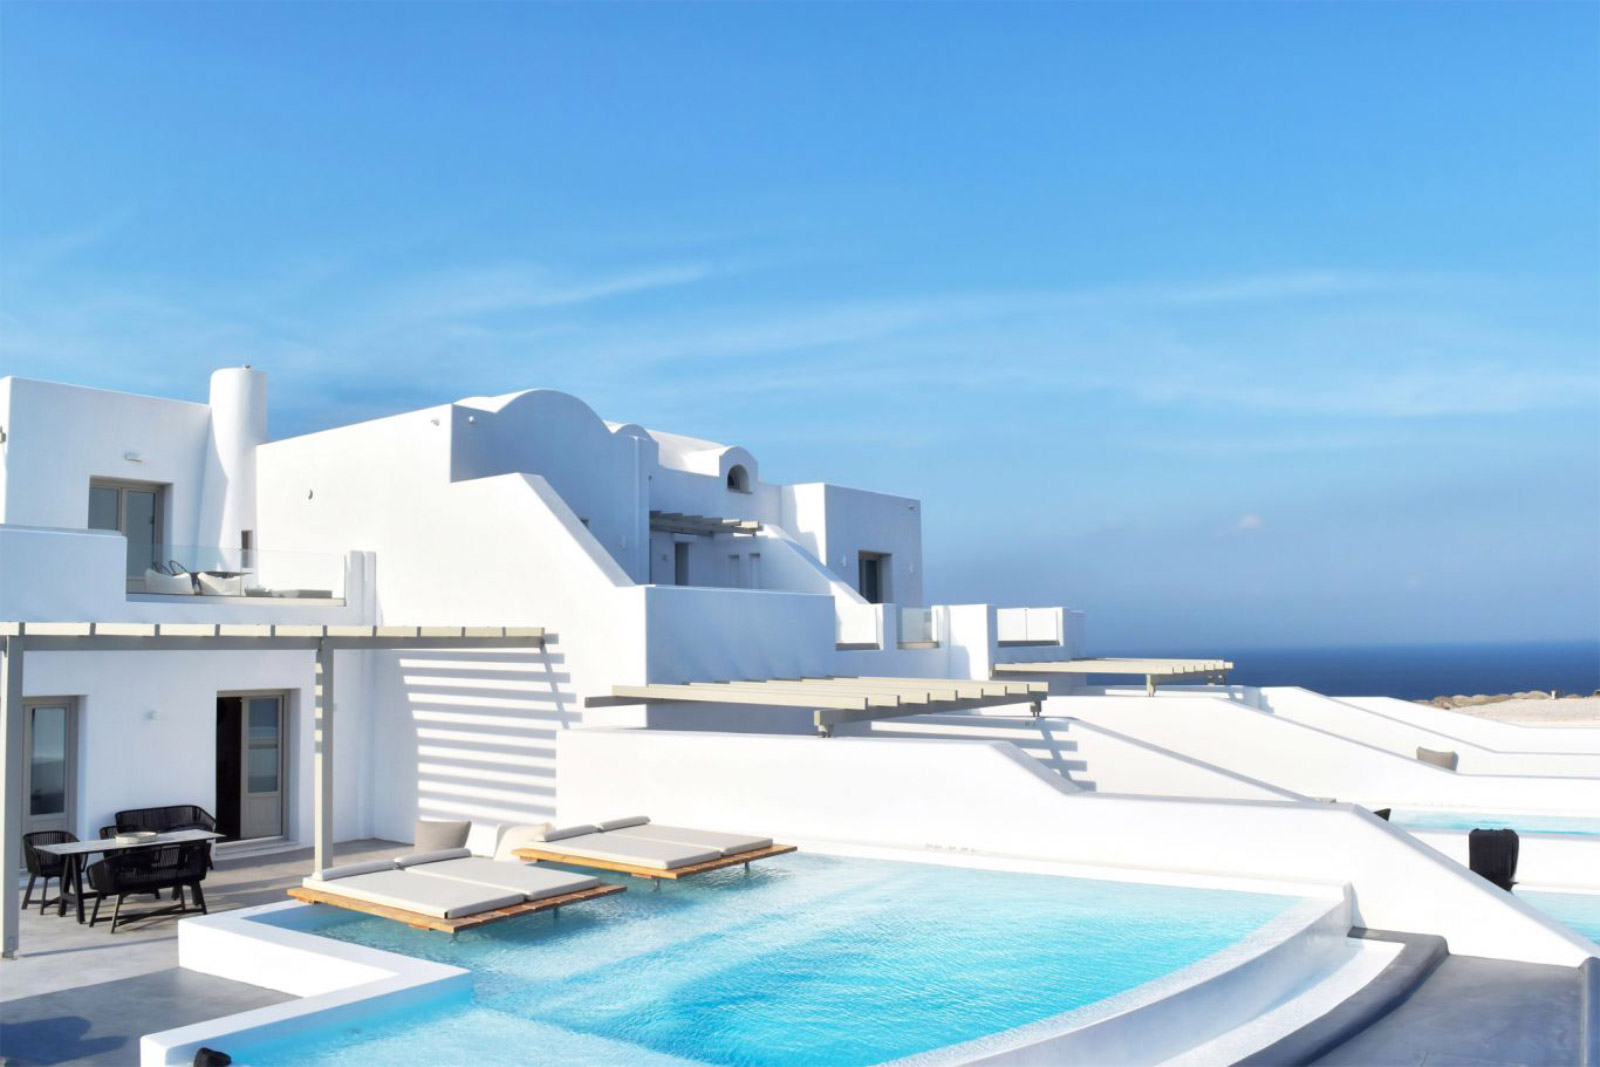 where to stay in santorini phos beach hotel